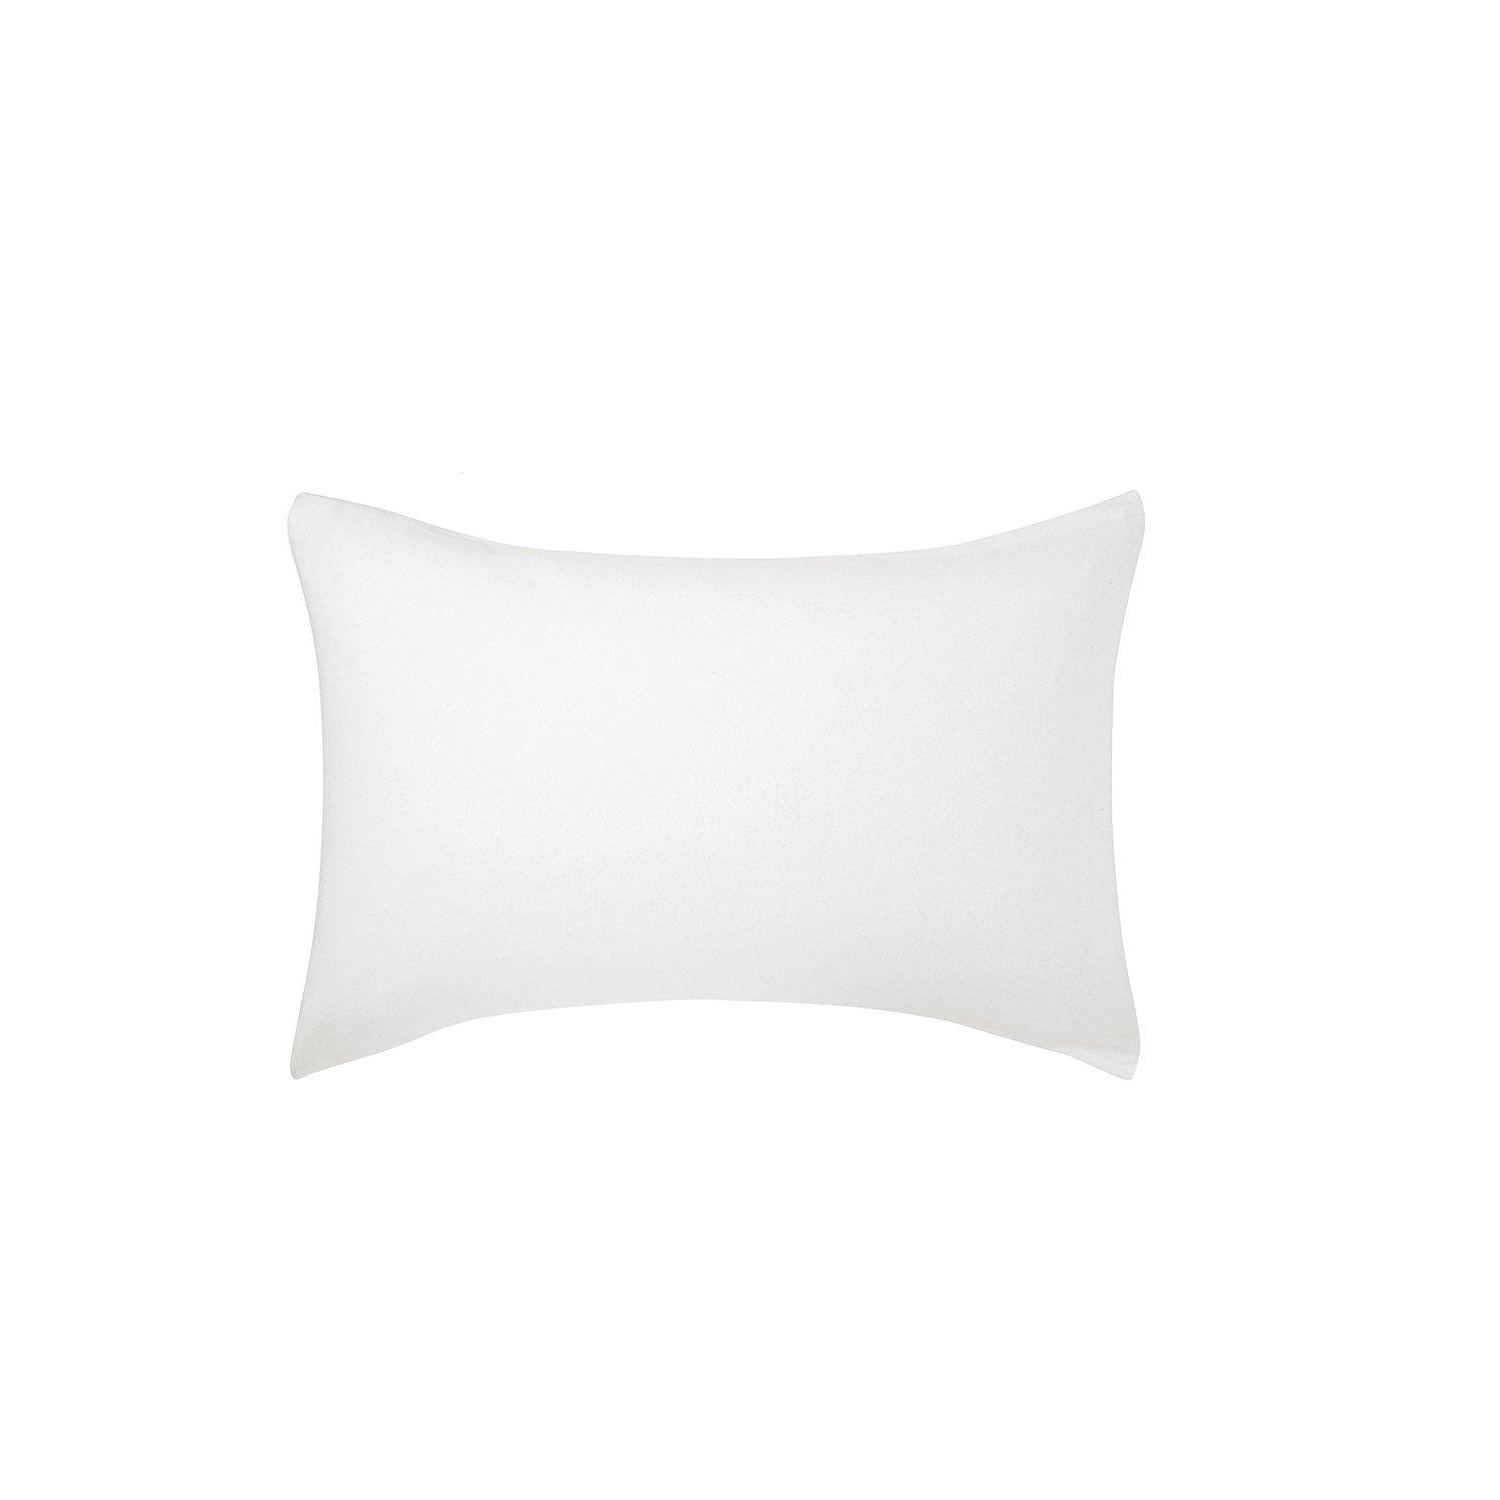 'Hs Brushed Cotton' Standard Pillowcase Pair - image 1